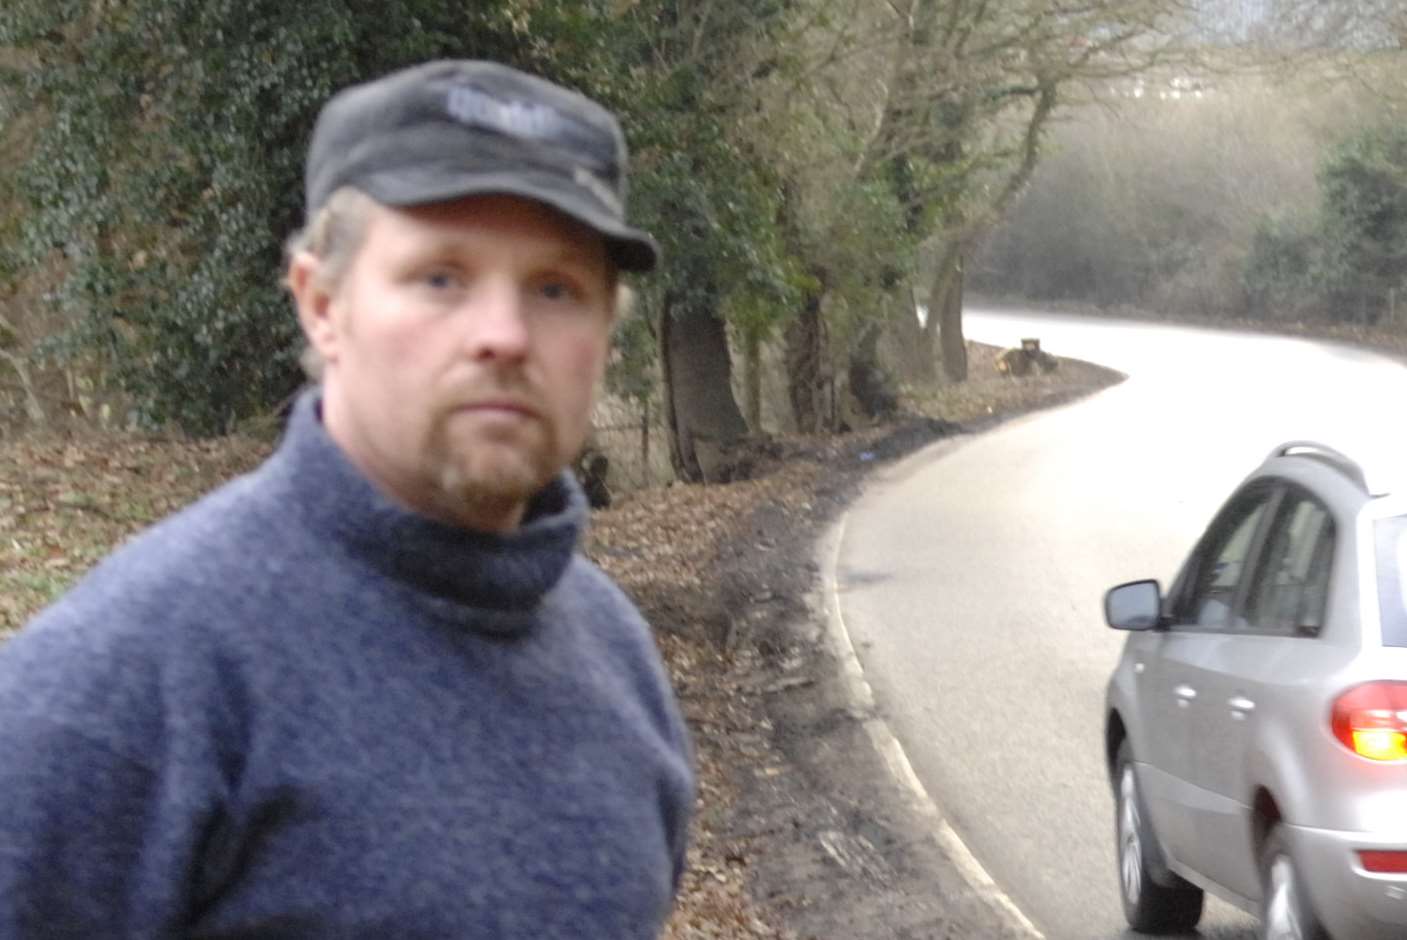 Paul Dale voiced fears about Shalloak Road